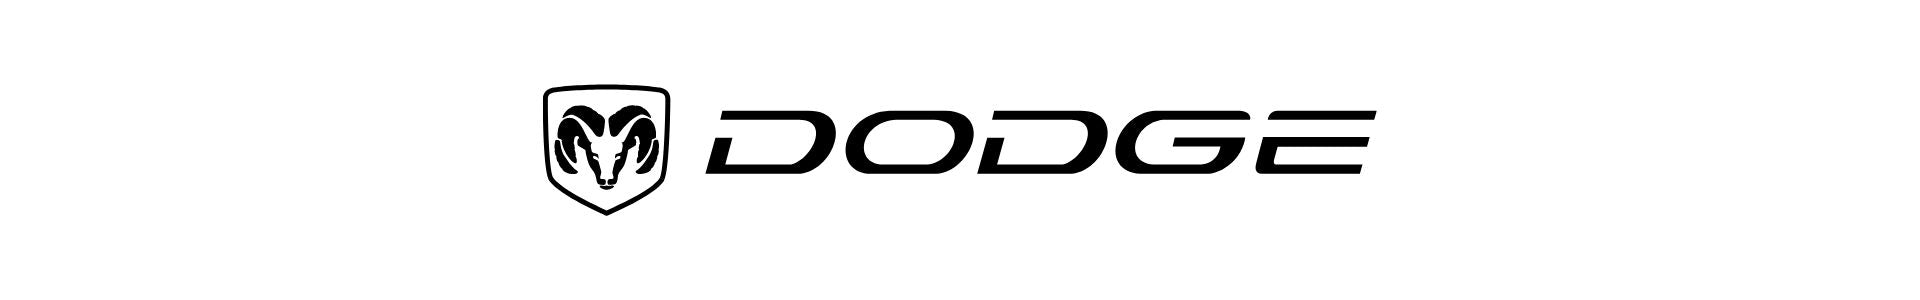 Dodge Ram 1500 - Radius Fabrications